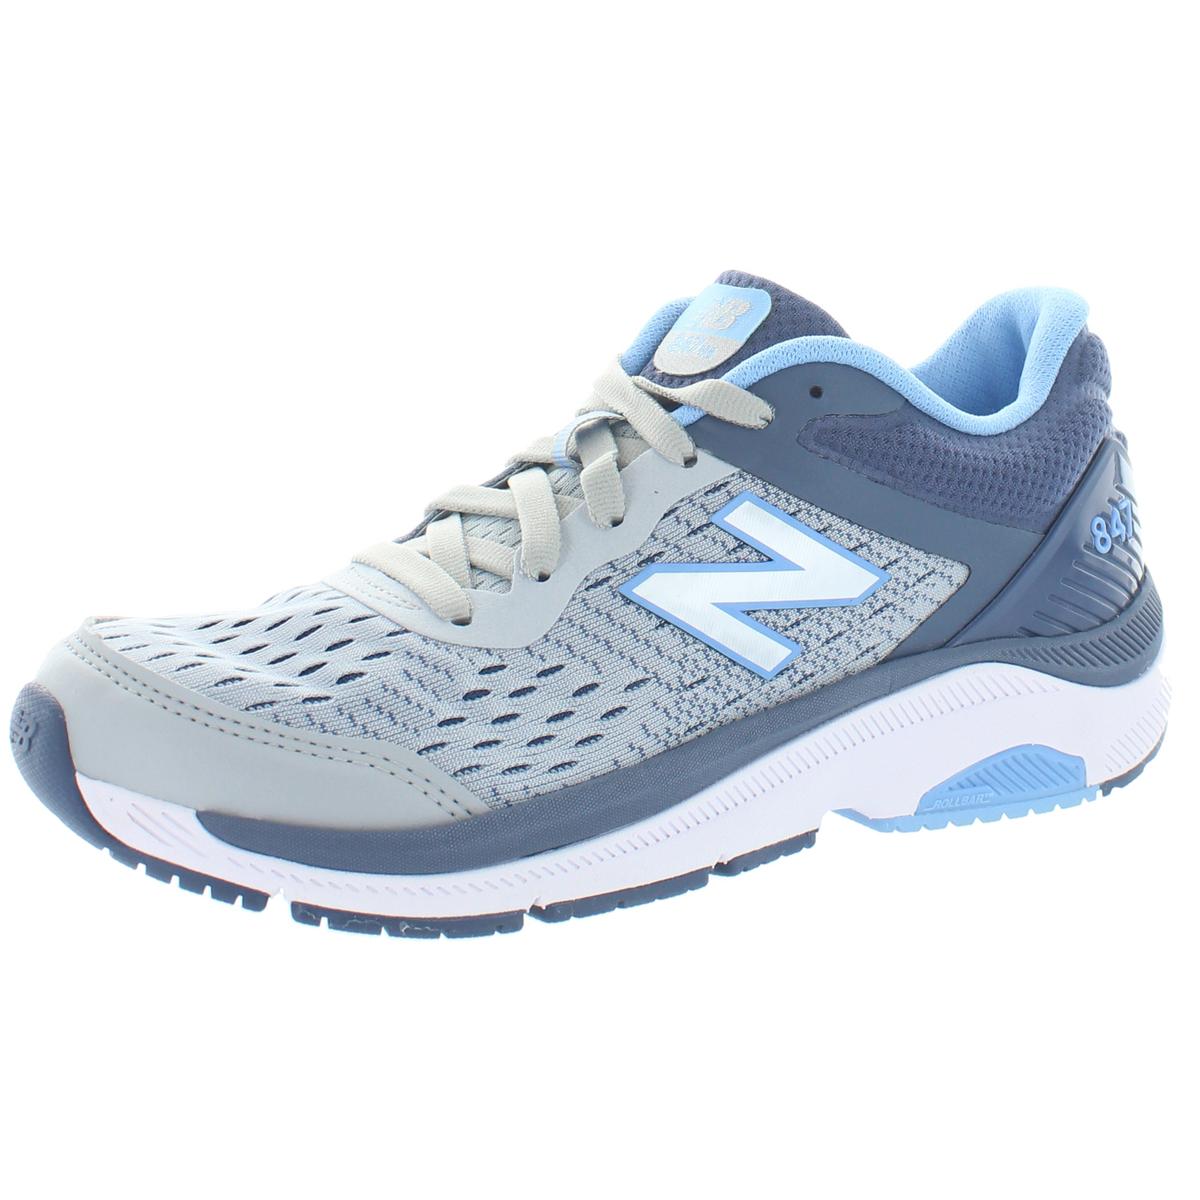 New Balance Womens 847 Gray Athletic Shoes Sneakers 7 Narrow (AA,N) BHFO 6490 | eBay